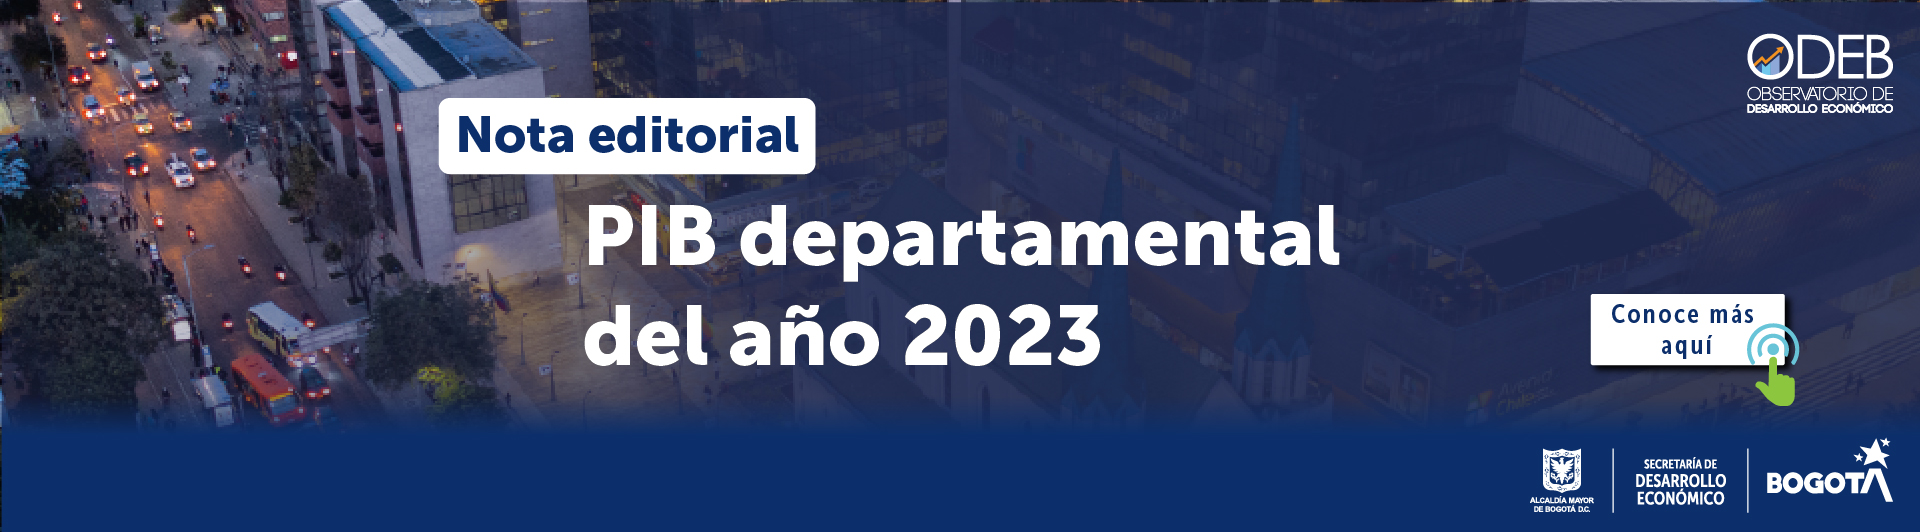 PIB departamental del año 2023